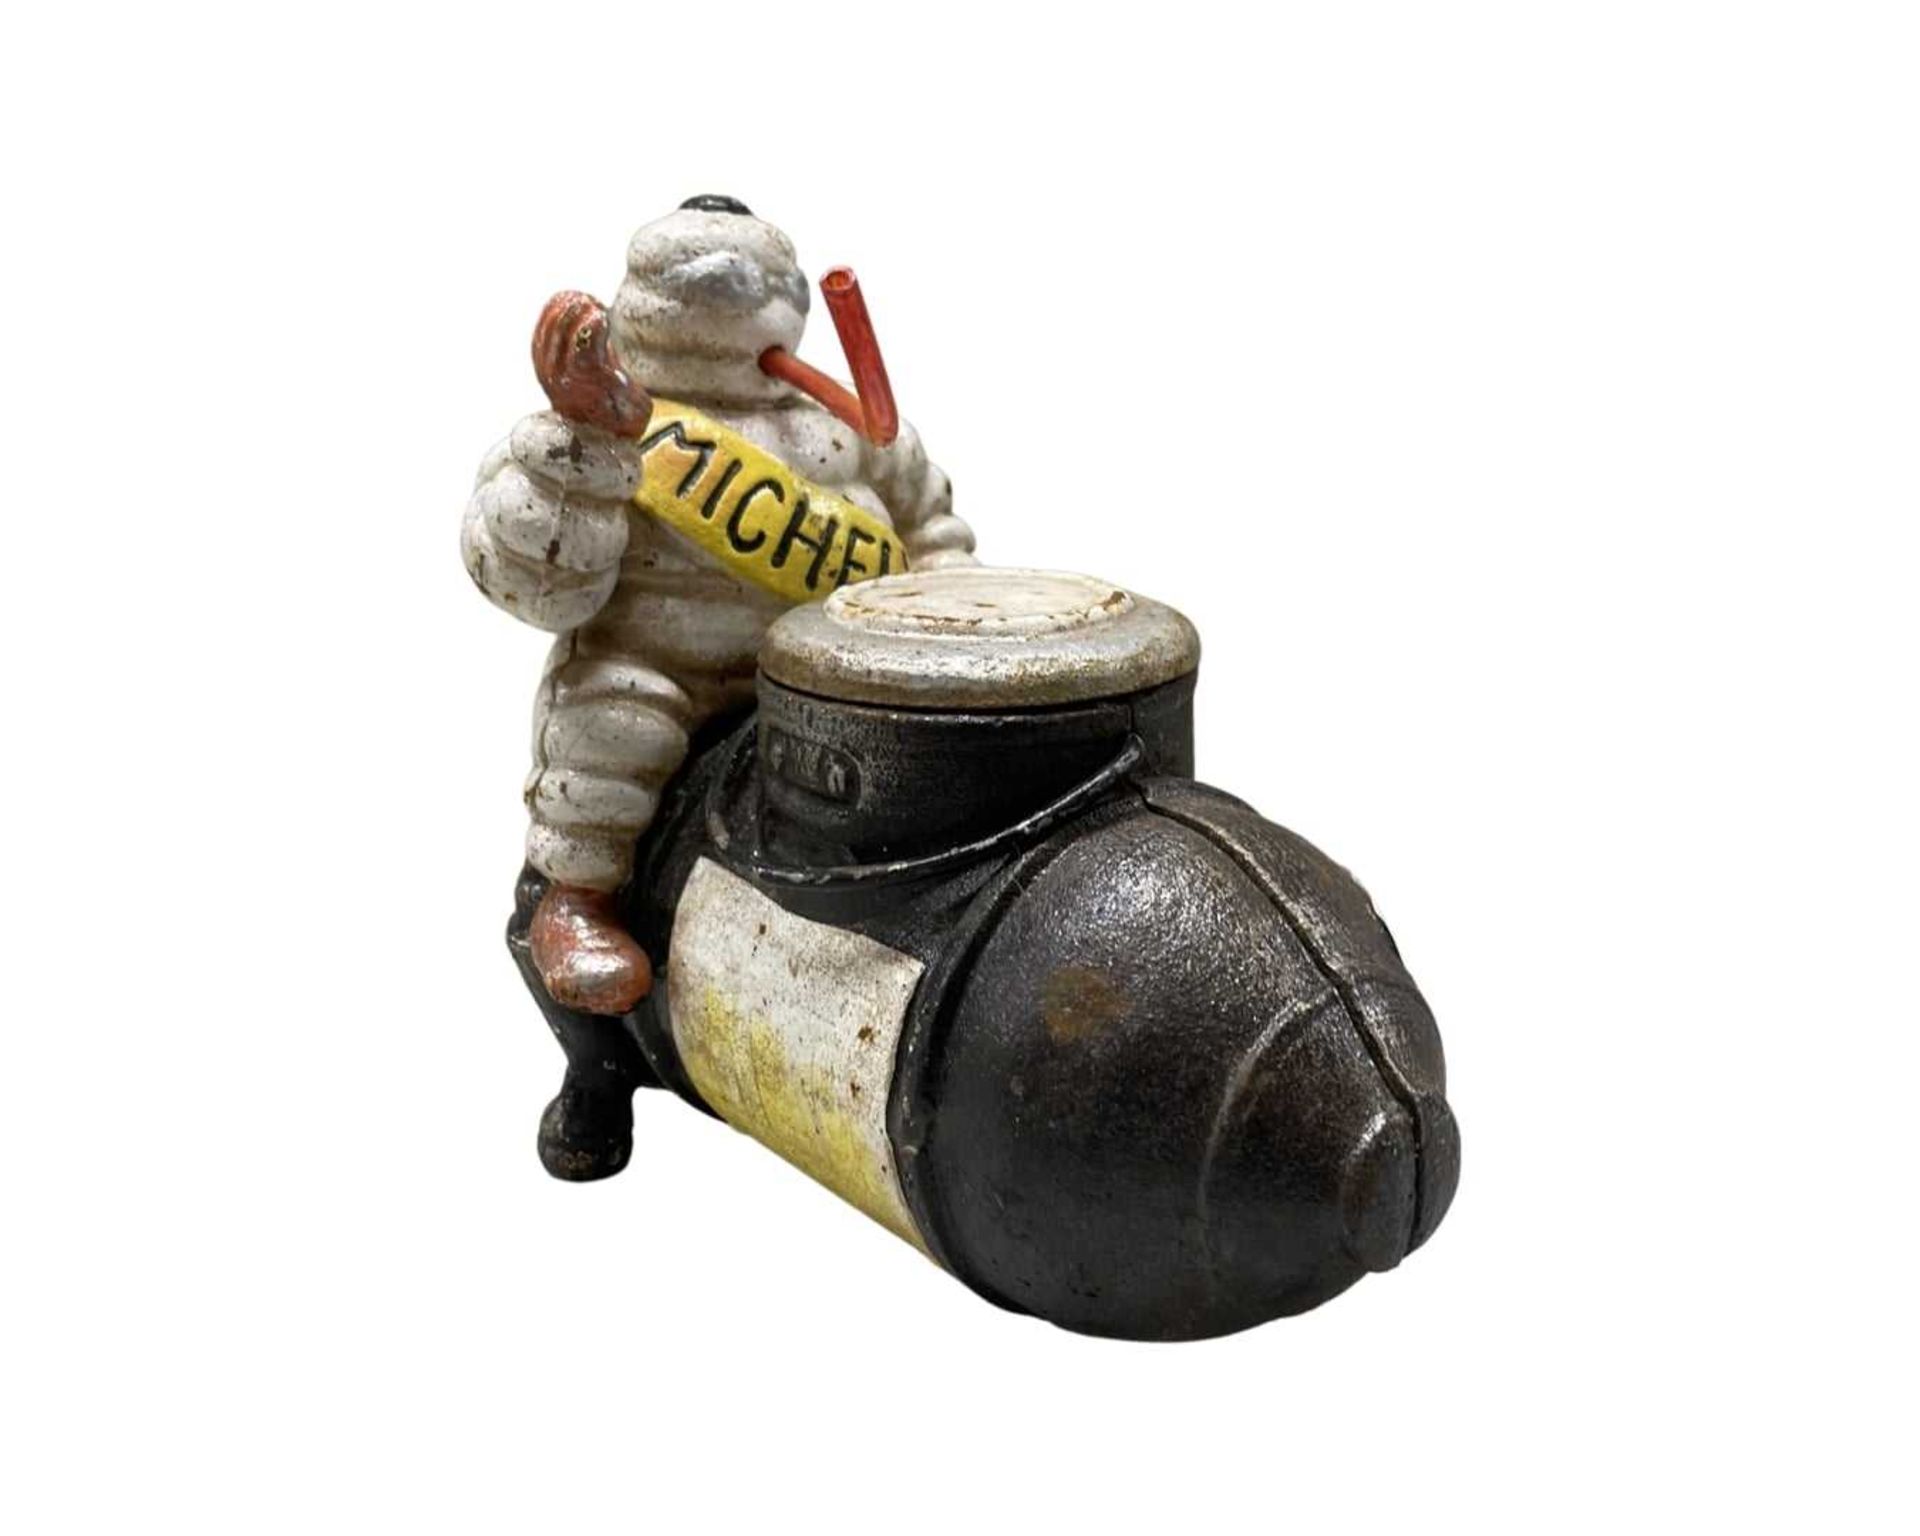 Cast iron Michelin Man riding a compressor - Image 2 of 2